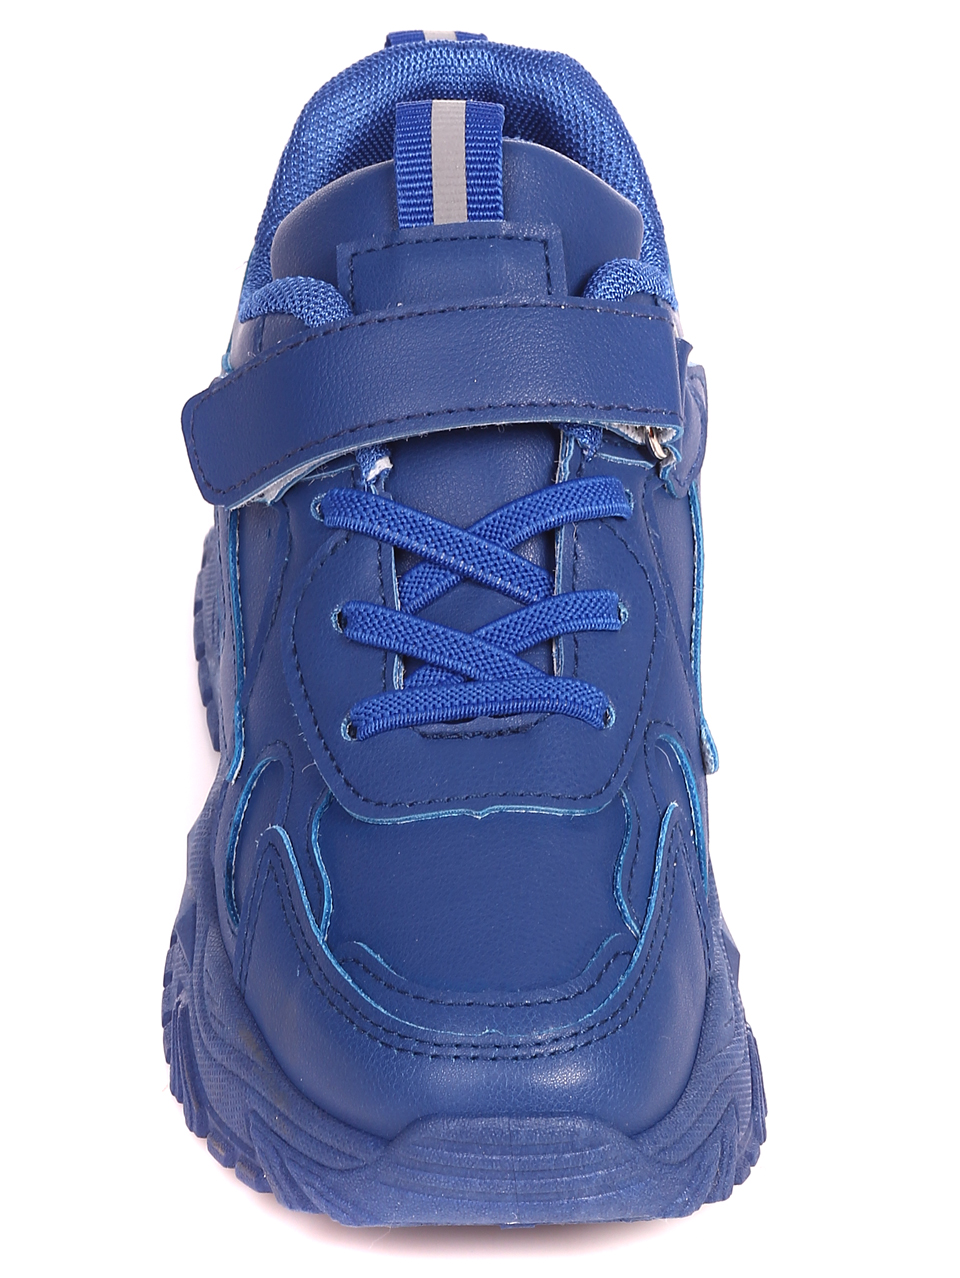 Ежедневни детски обувки в синьо 18U-22600 royal blue